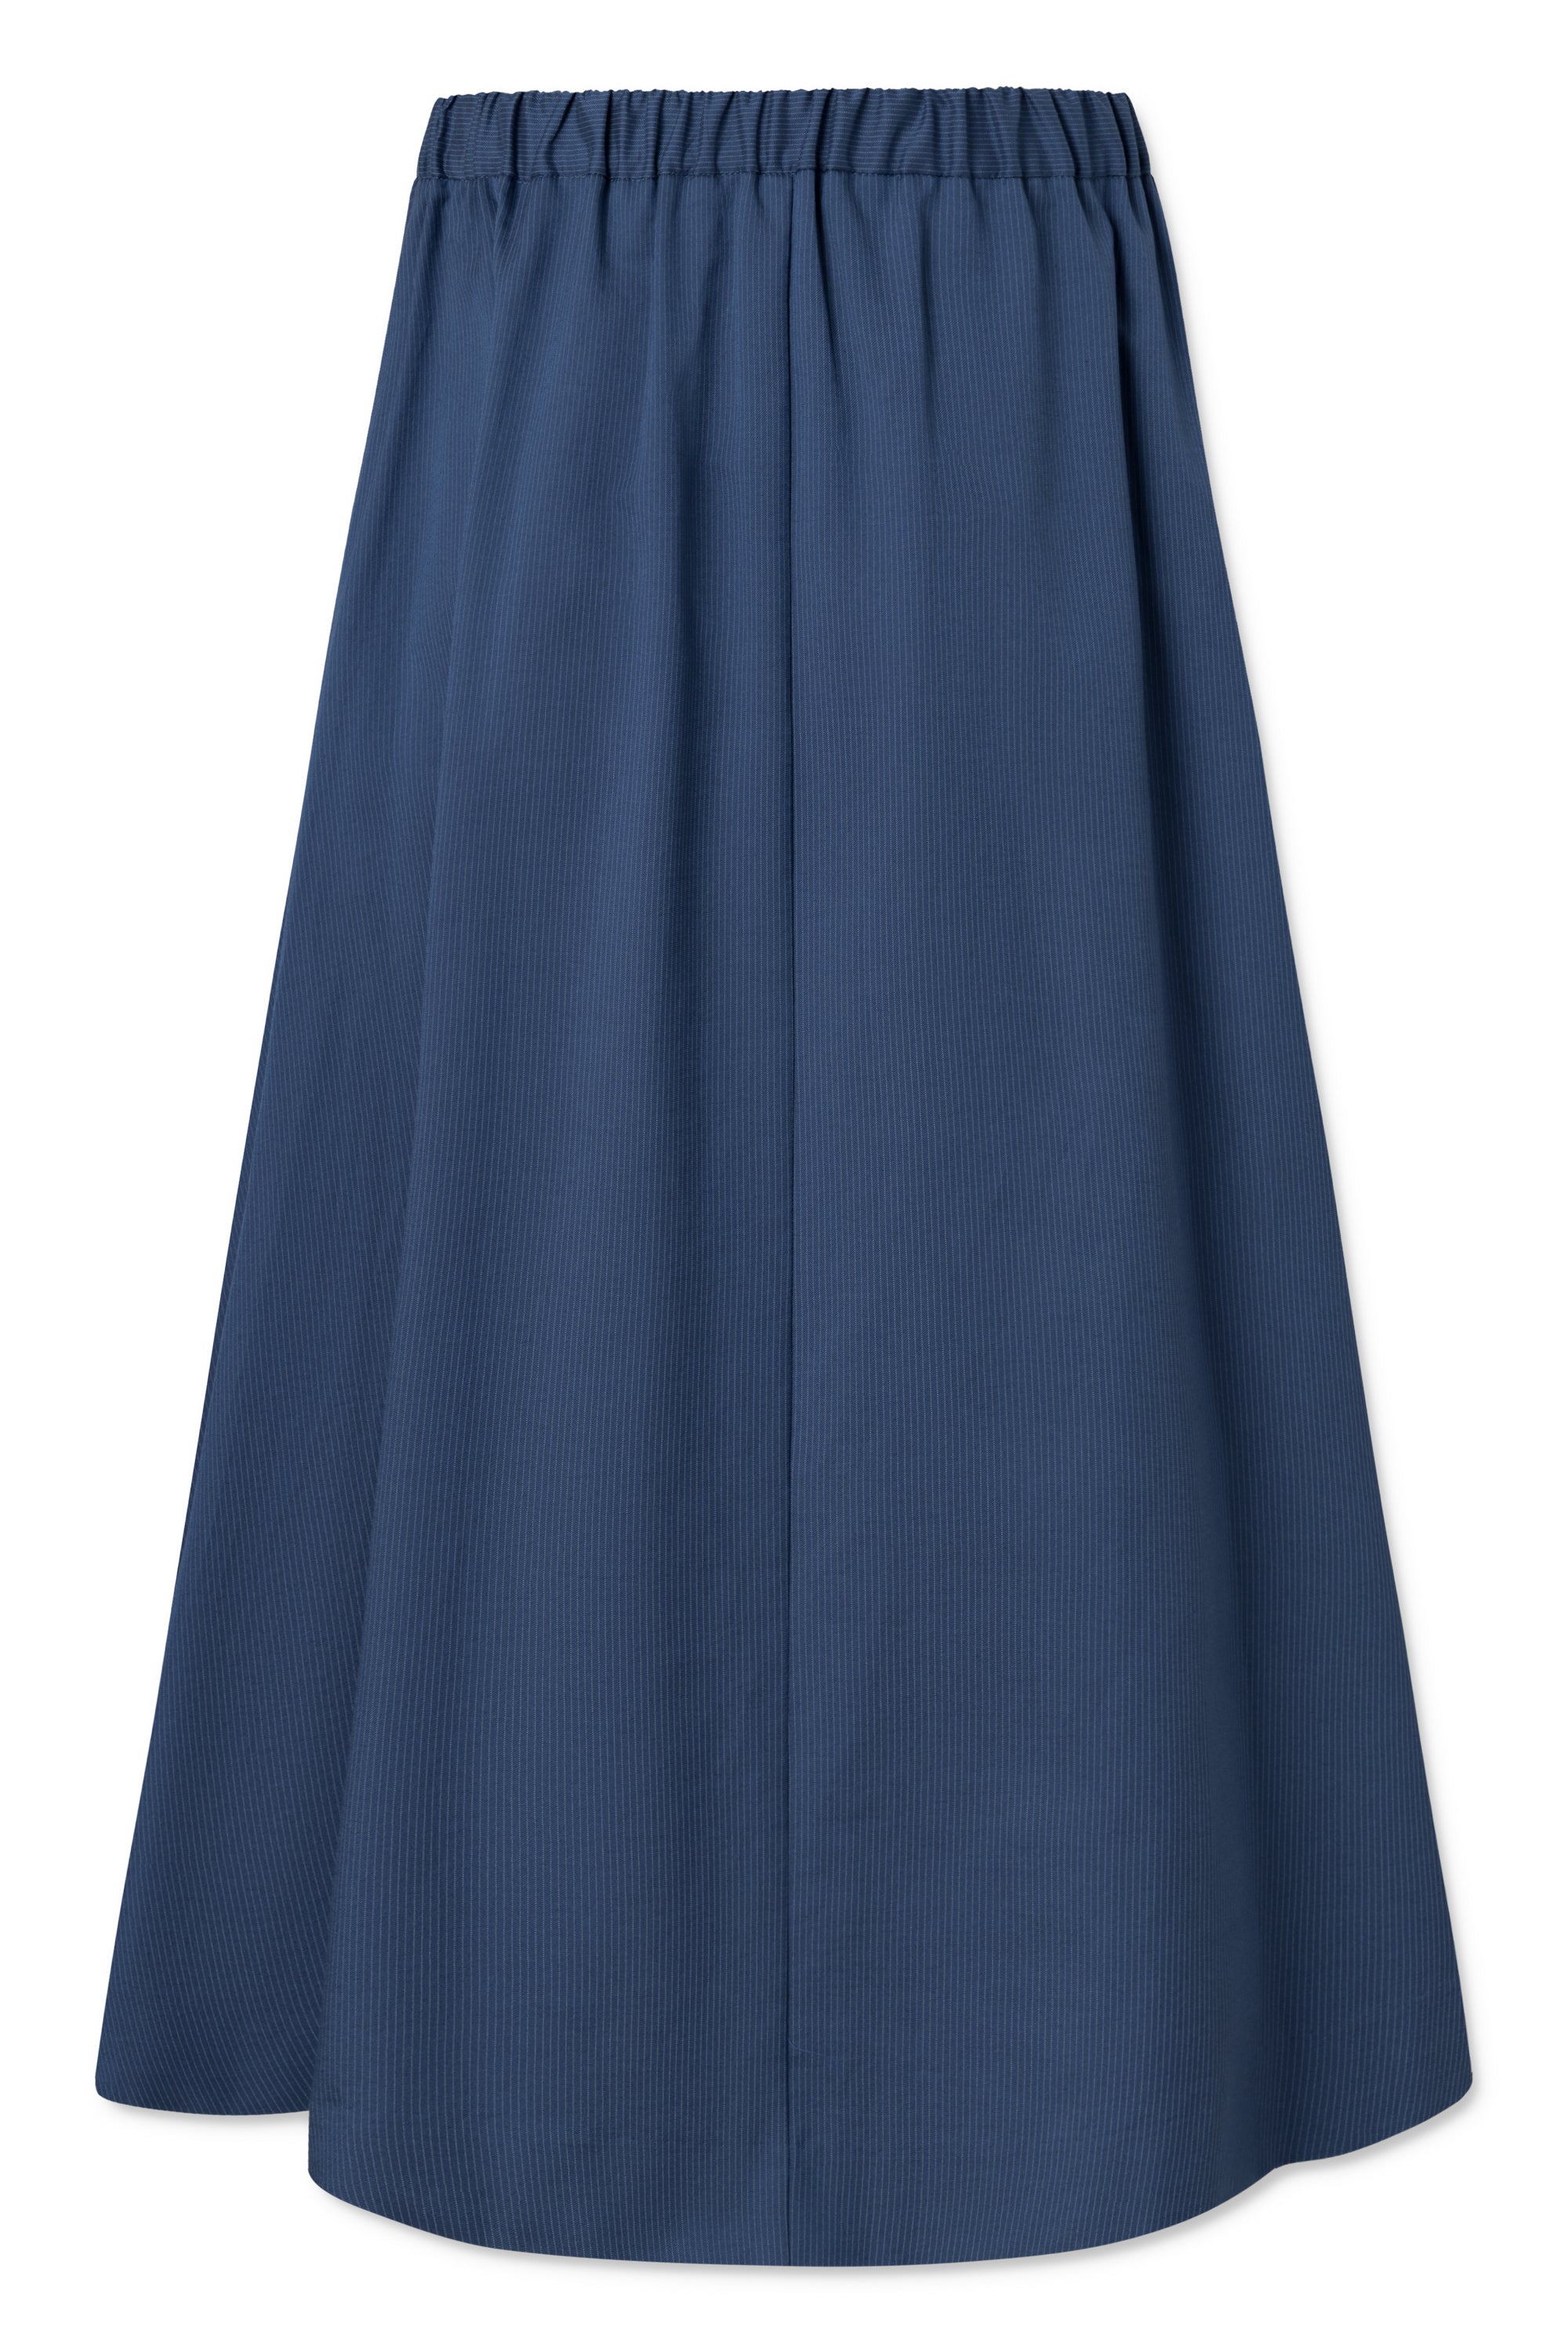 Nué Notes Smith Skirt SKIRTS 421 DUSTY BLUE